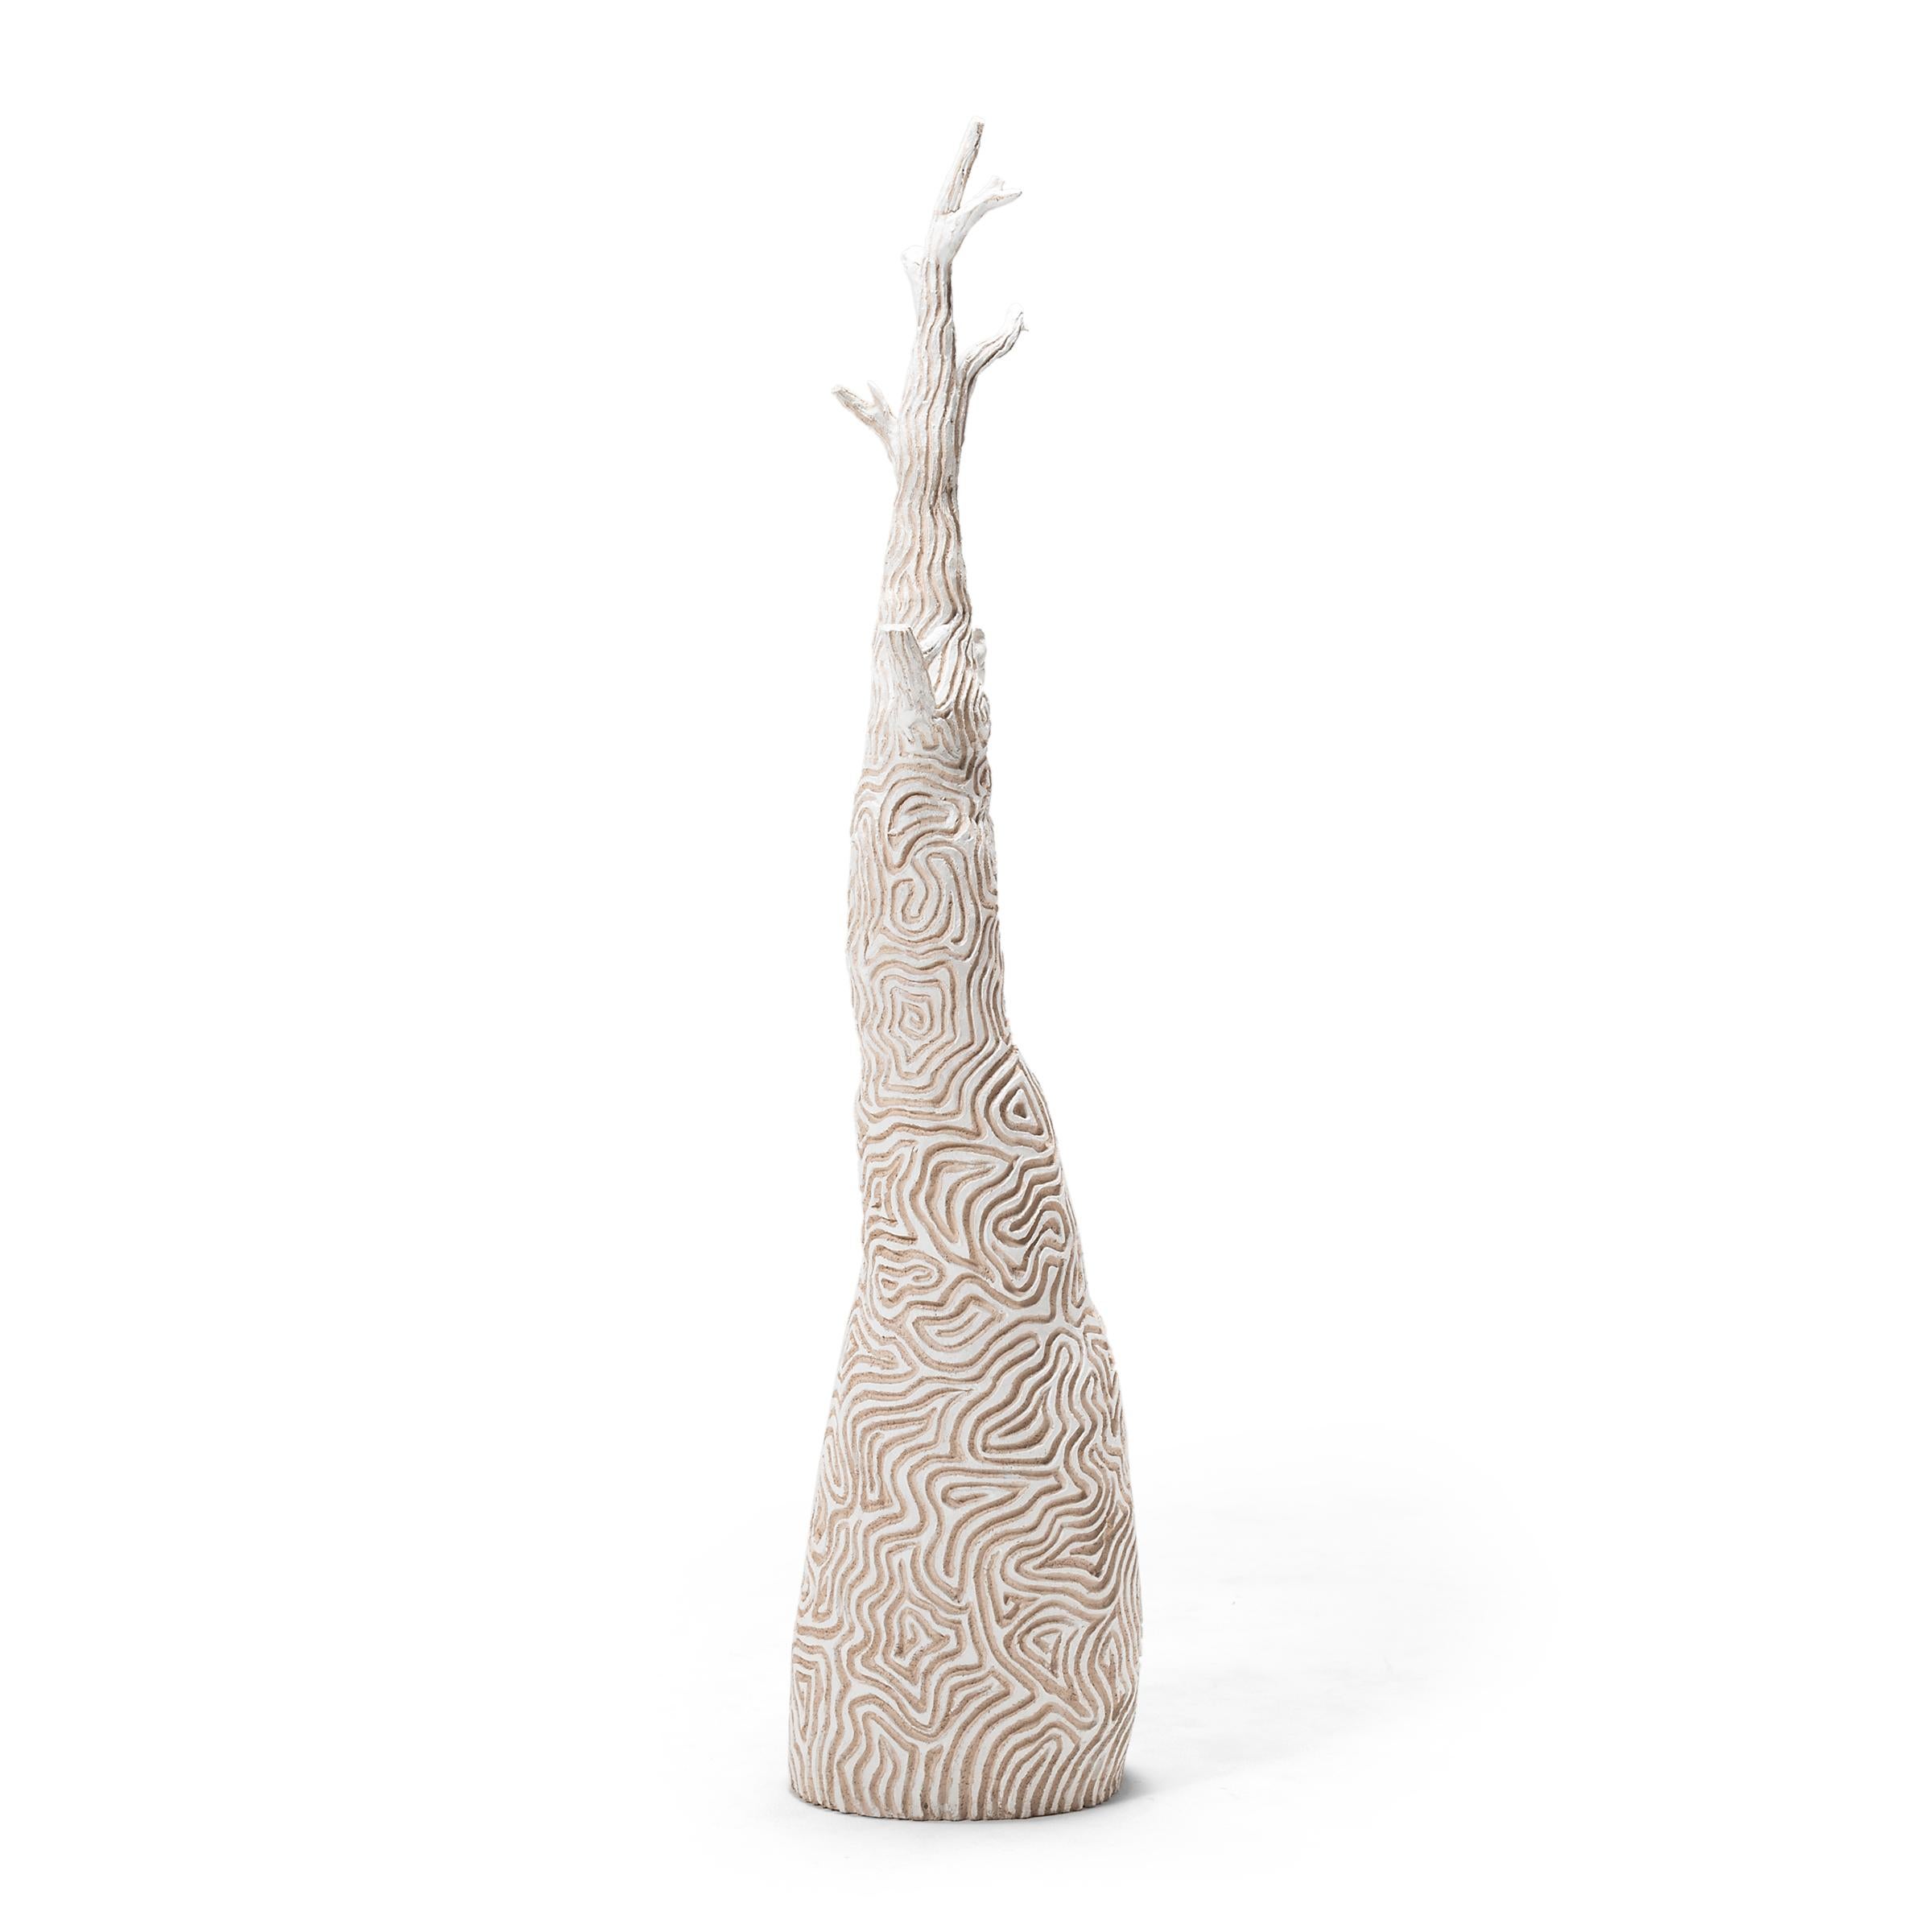 Folk Art White Ceramic Tree Sculpture